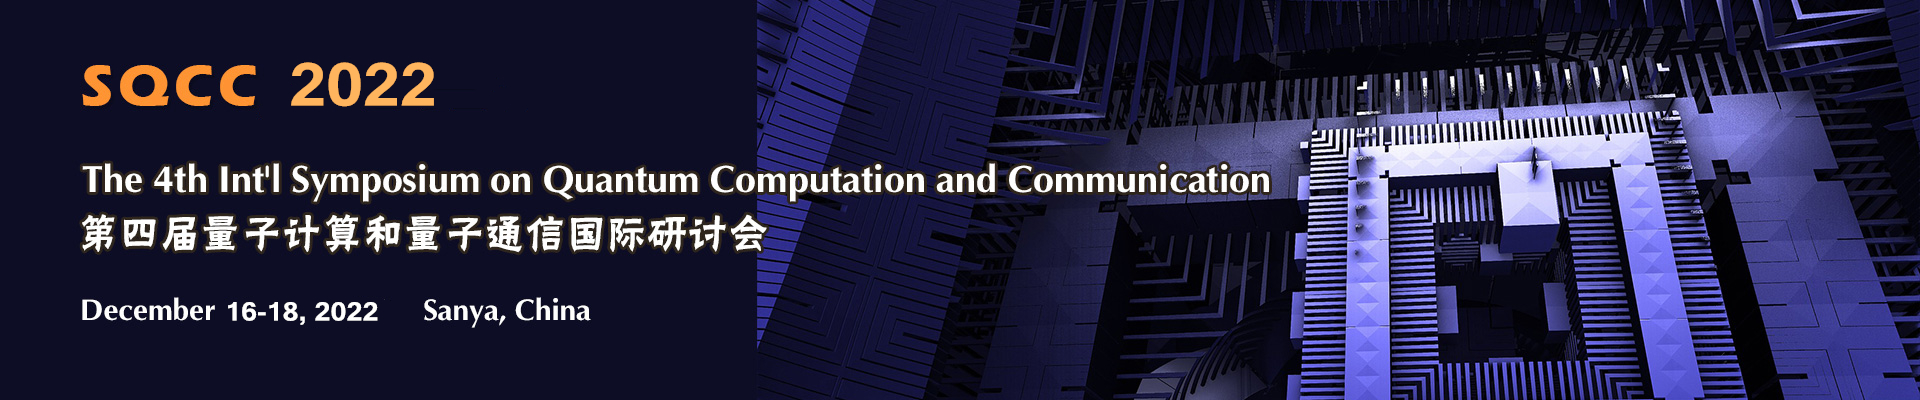 The 4th Int'l Symposium on Quantum Computation and Communication (SQCC 2022)